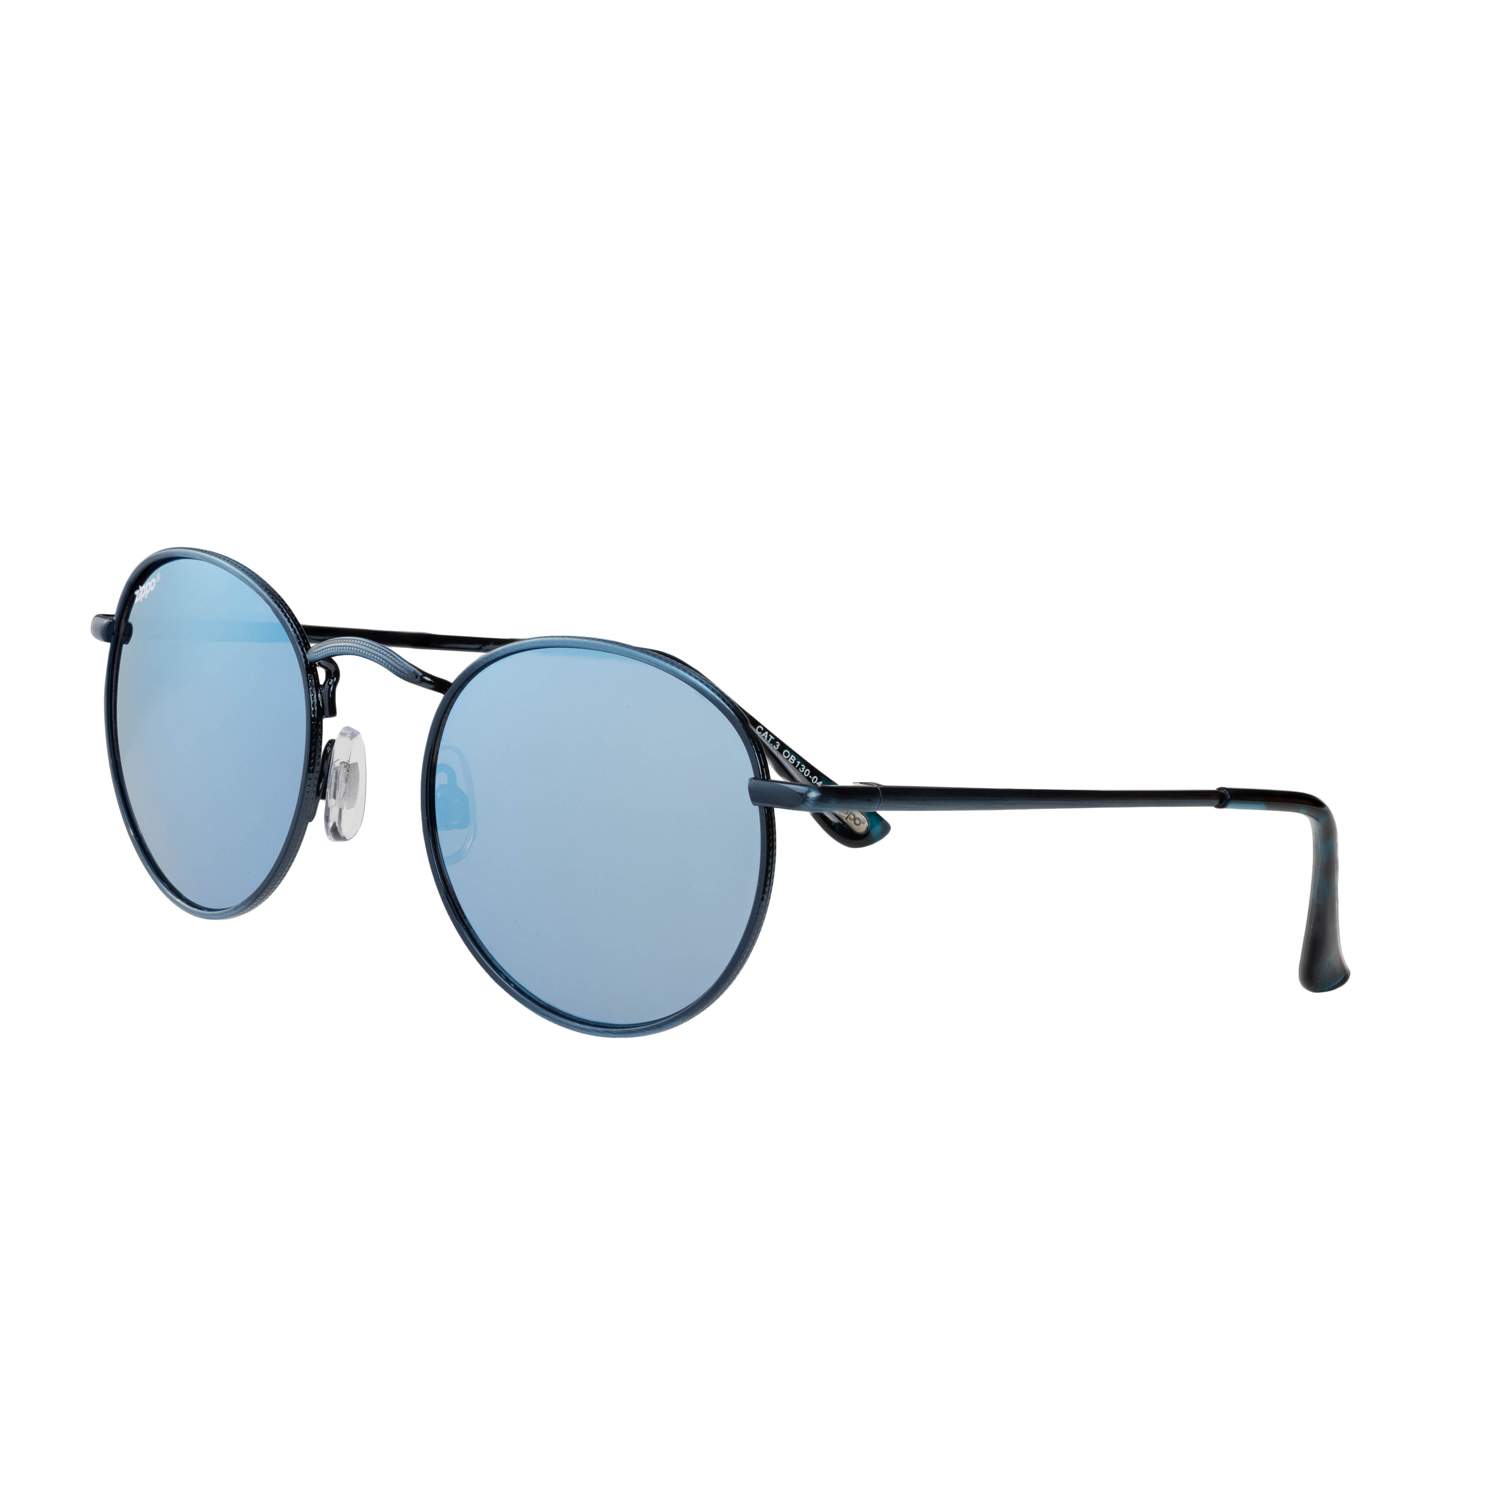 Солнцезащитные очки унисекс Zippo OB130 синие